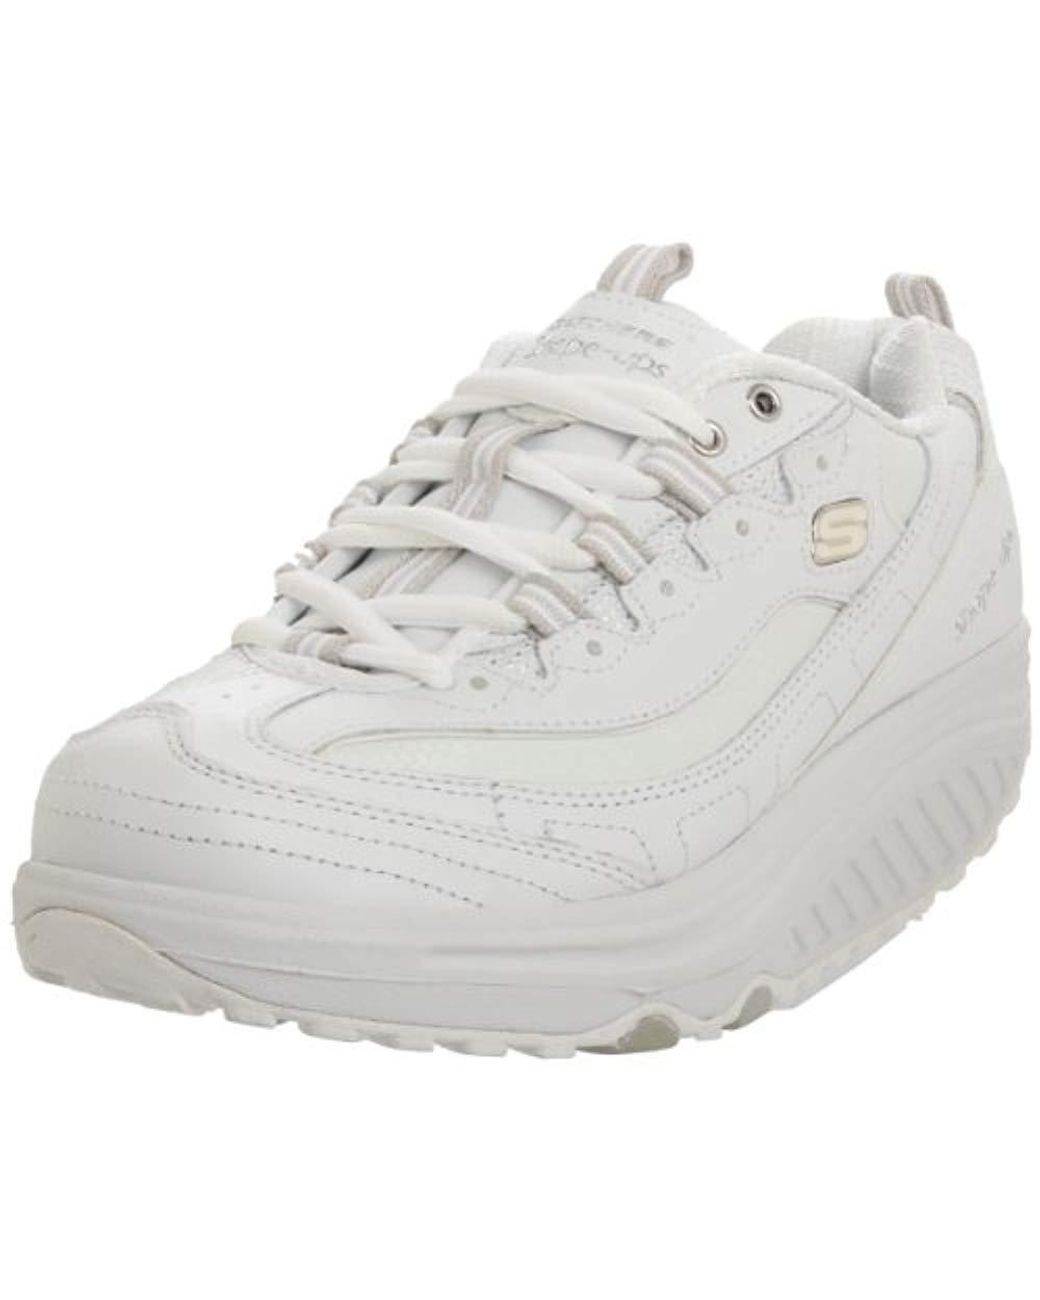 Skechers Shape Ups Womens Size 10 White Walking Fitness Sneakers Shoes  11817